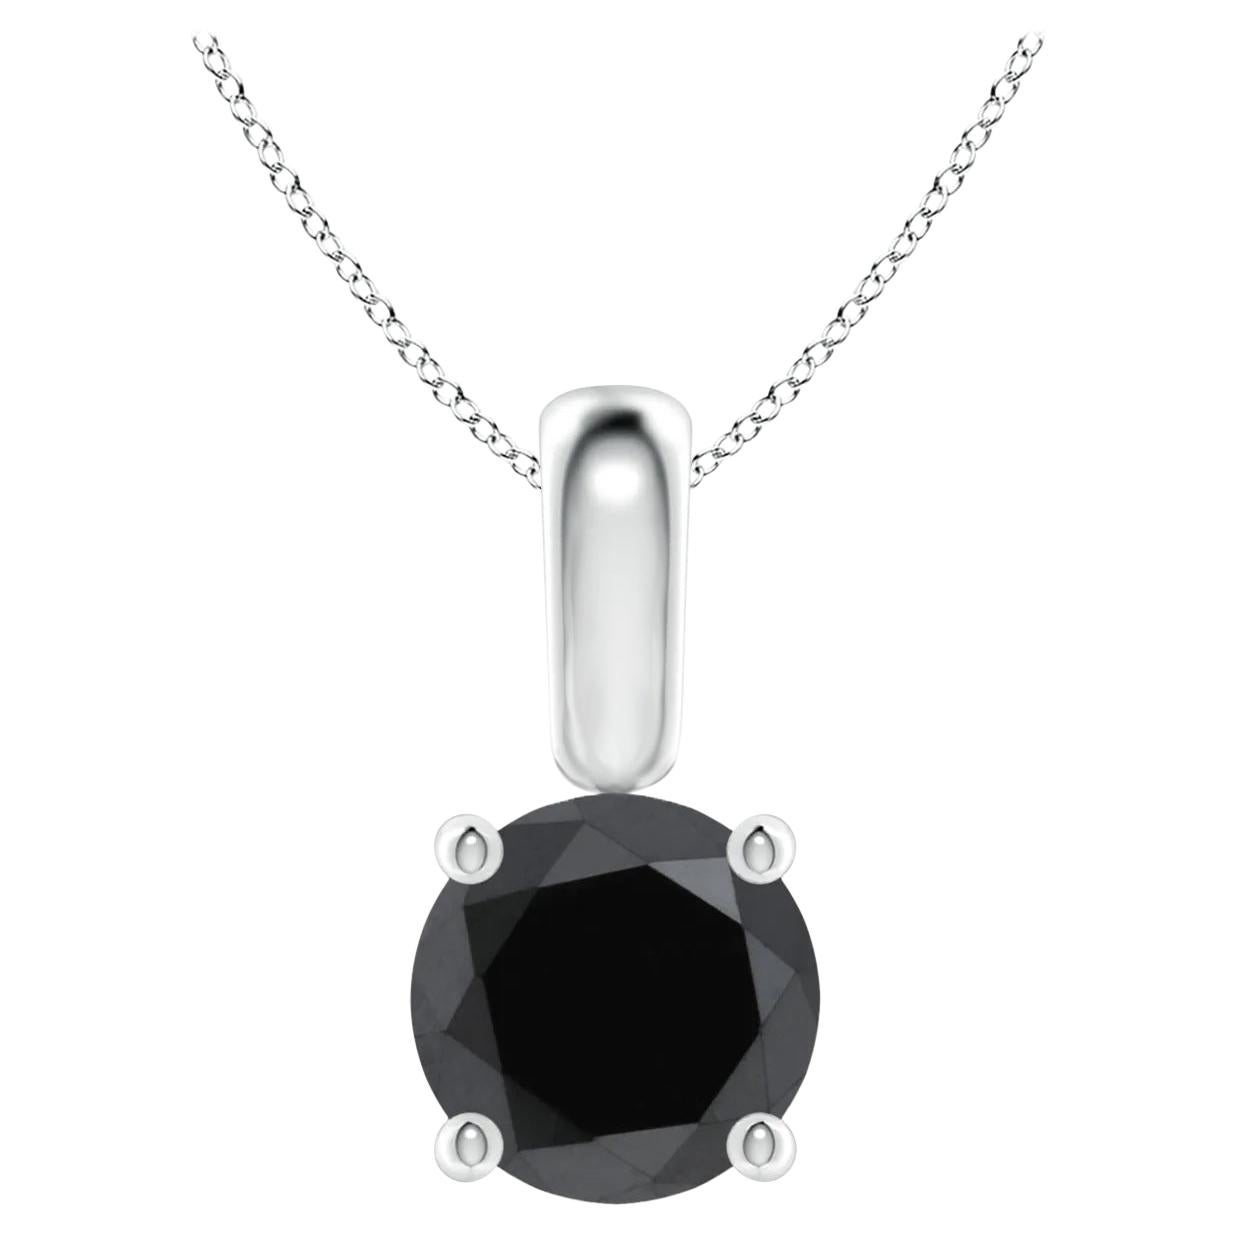 2.01 Carat Round Black Diamond Solitaire Pendant Necklace in 14K White Gold